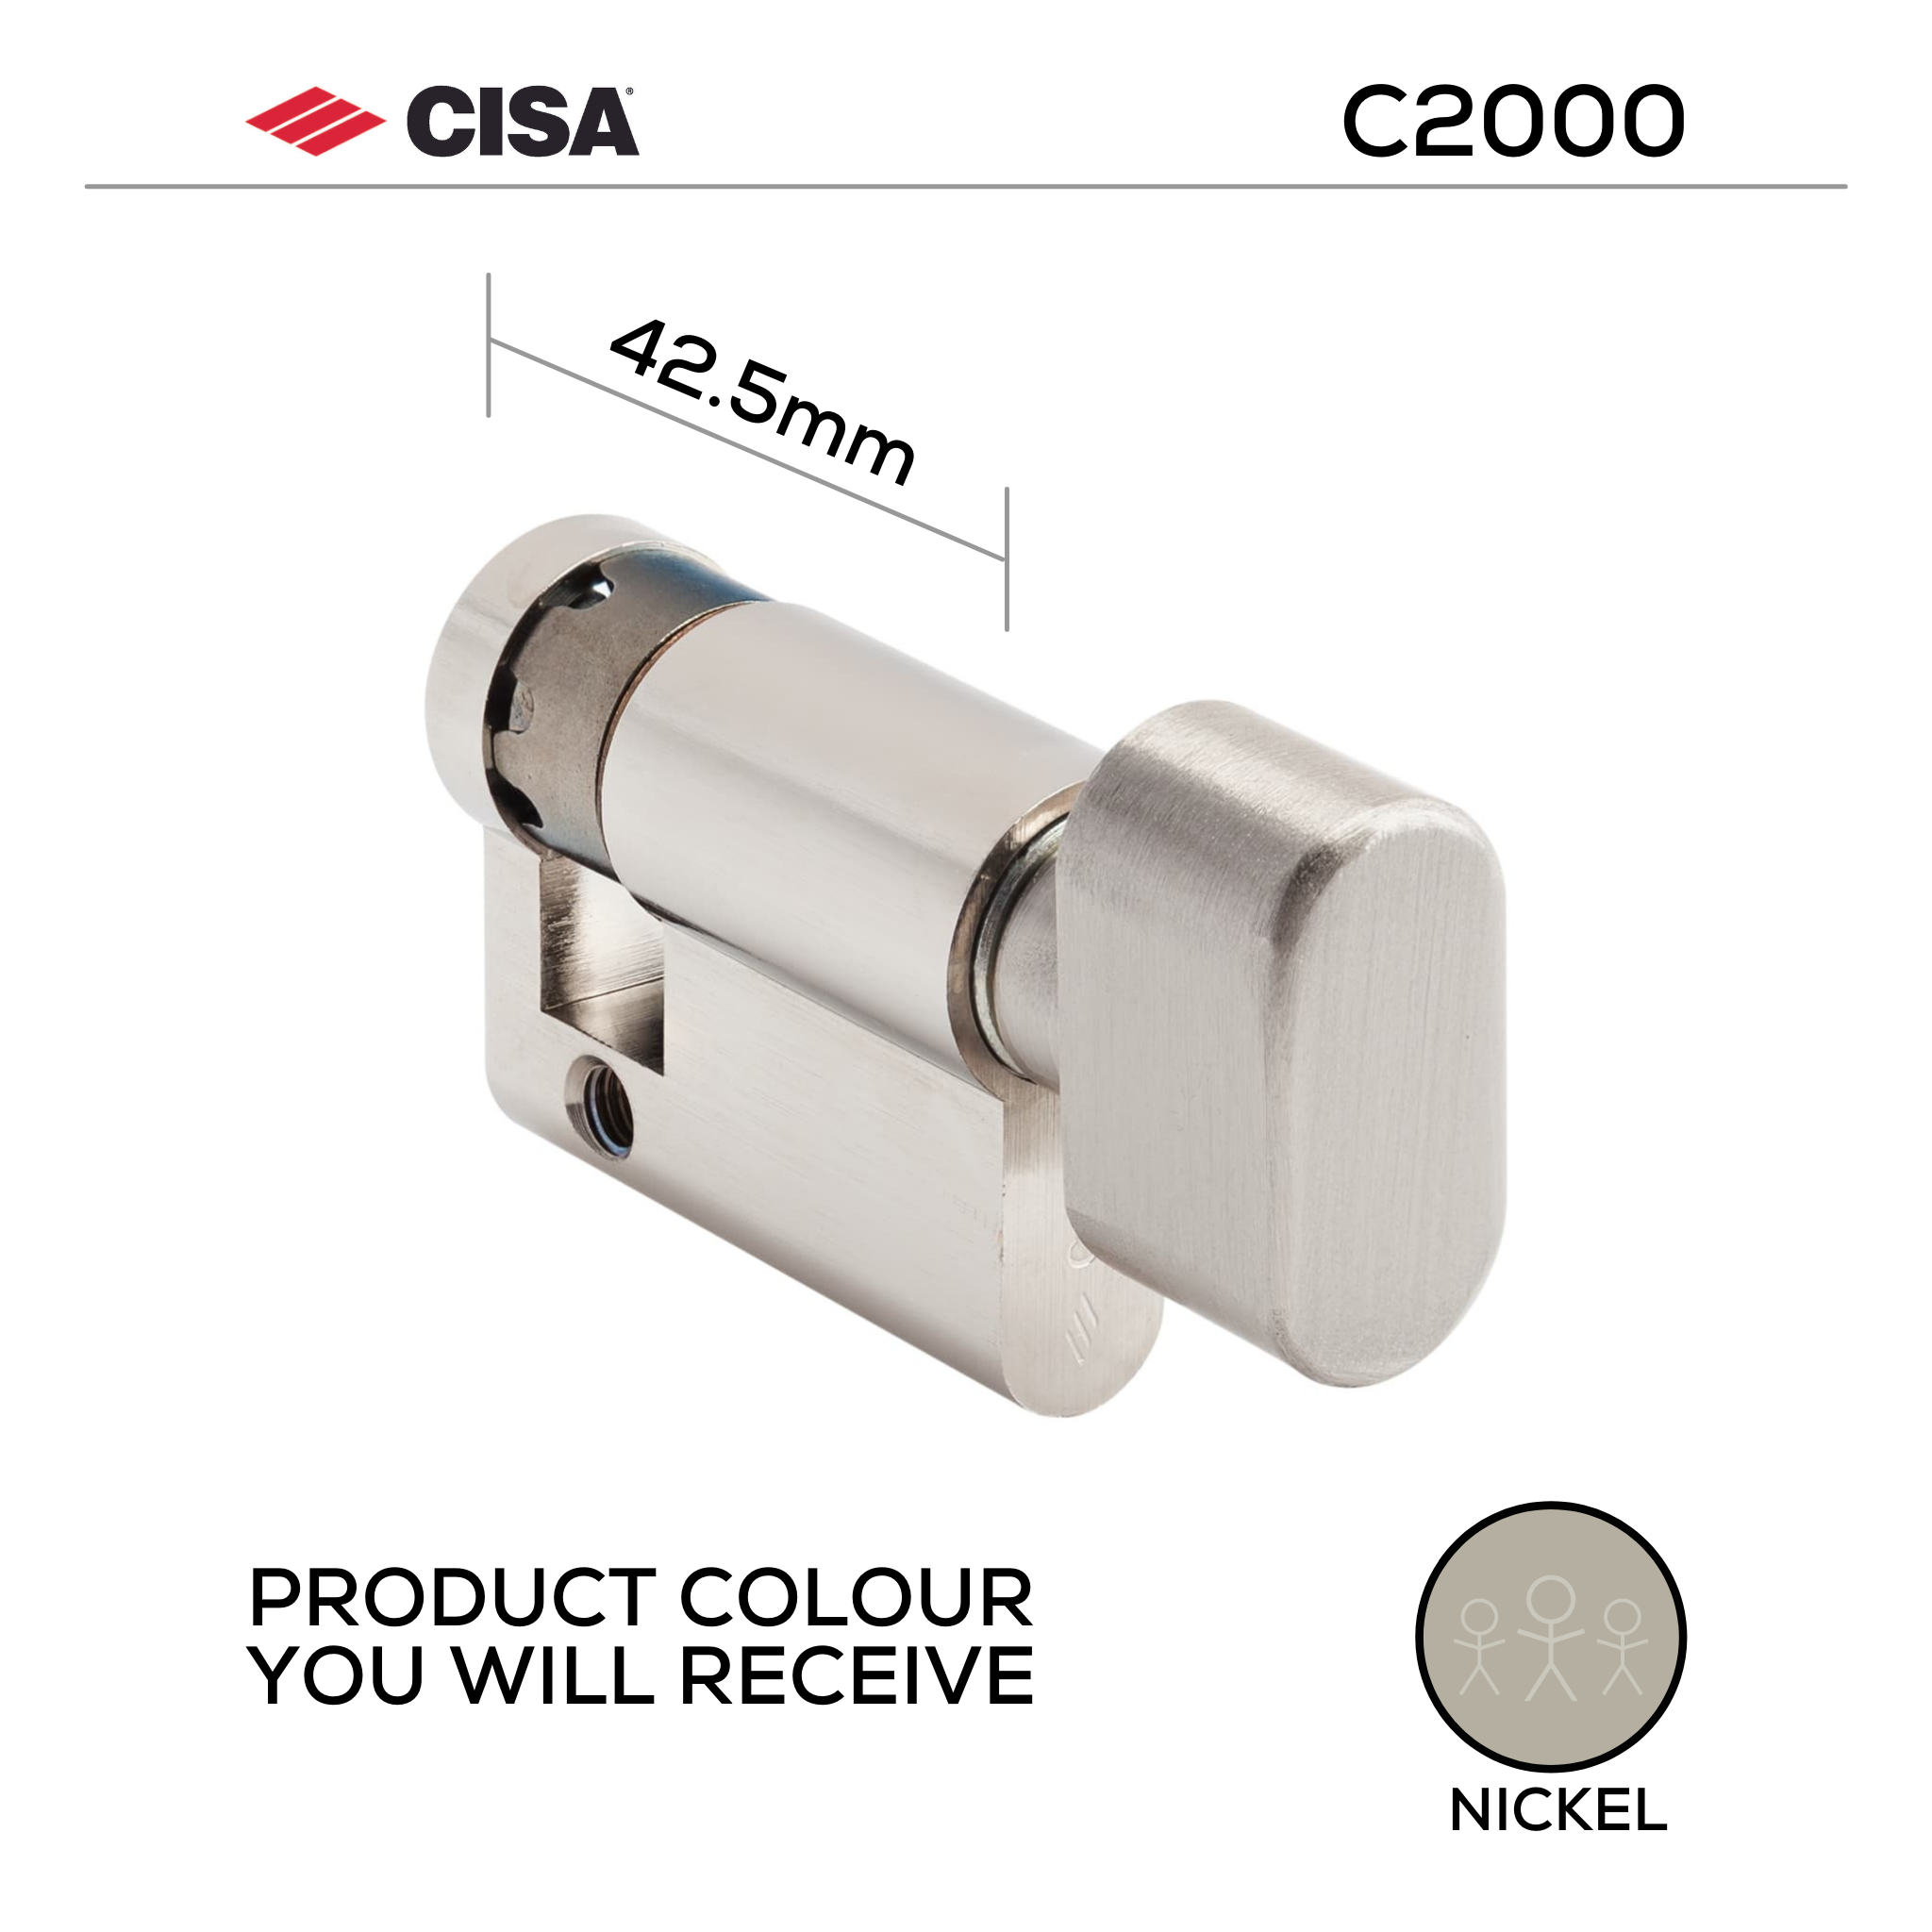 08559-09-12-KD, 42,5mm - 32.5/10, Half (Single Cylinder), C2000, Thumbturn, Keyed to Differ (Standard), Nickel, CISA